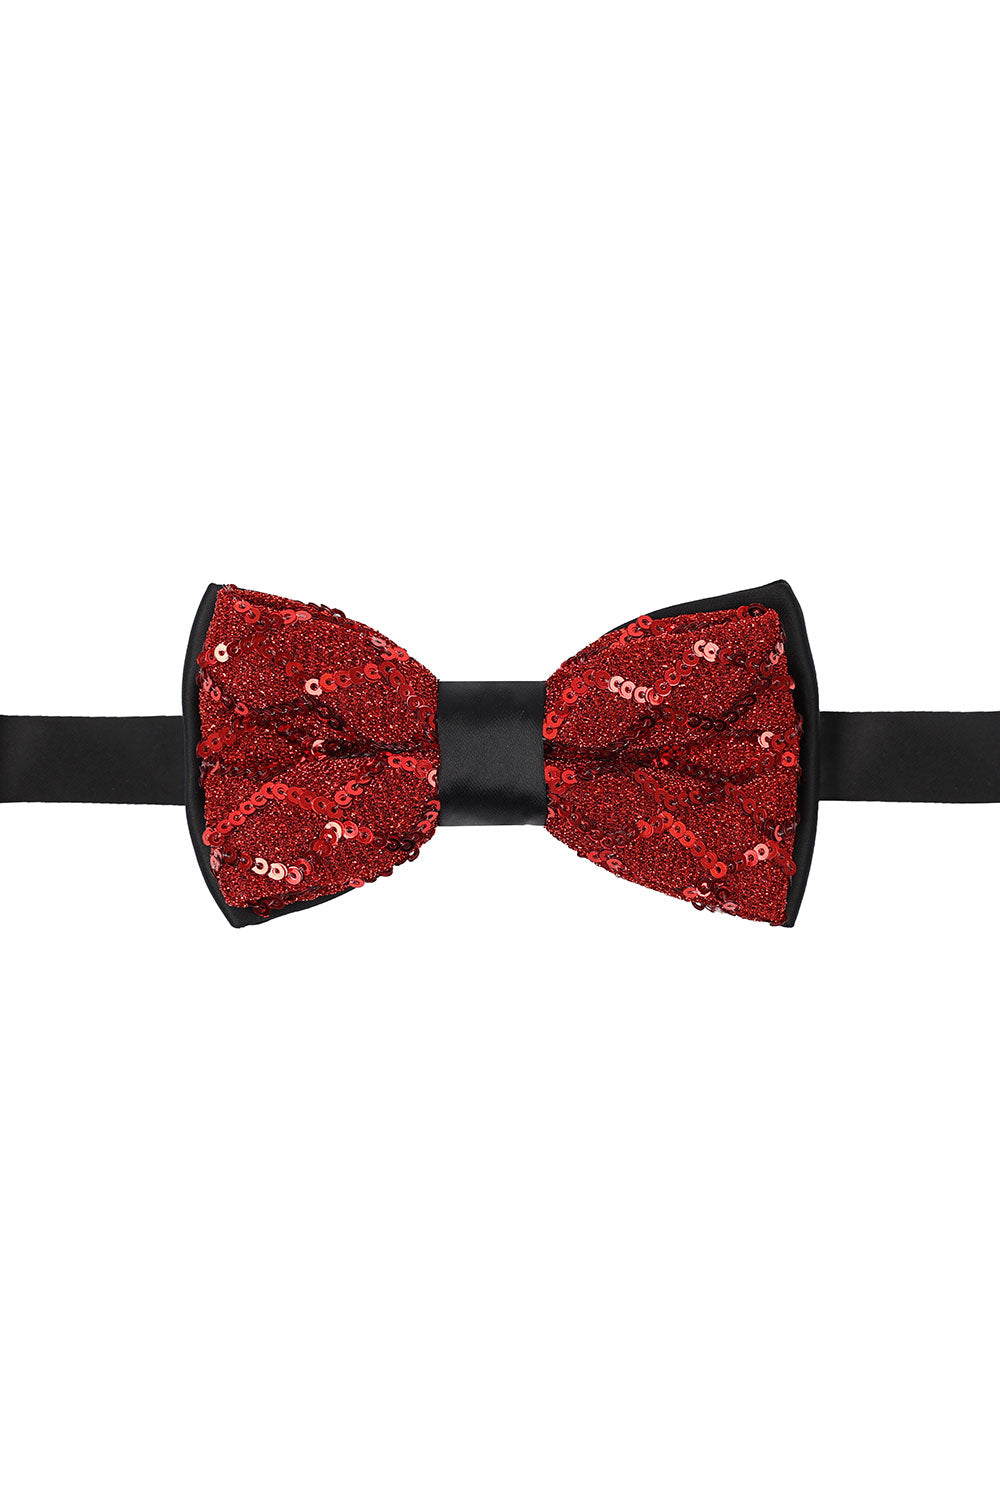 BARABAS Men's Diamond Sequin Pattern Design Bow Tie 2BW3099 Red